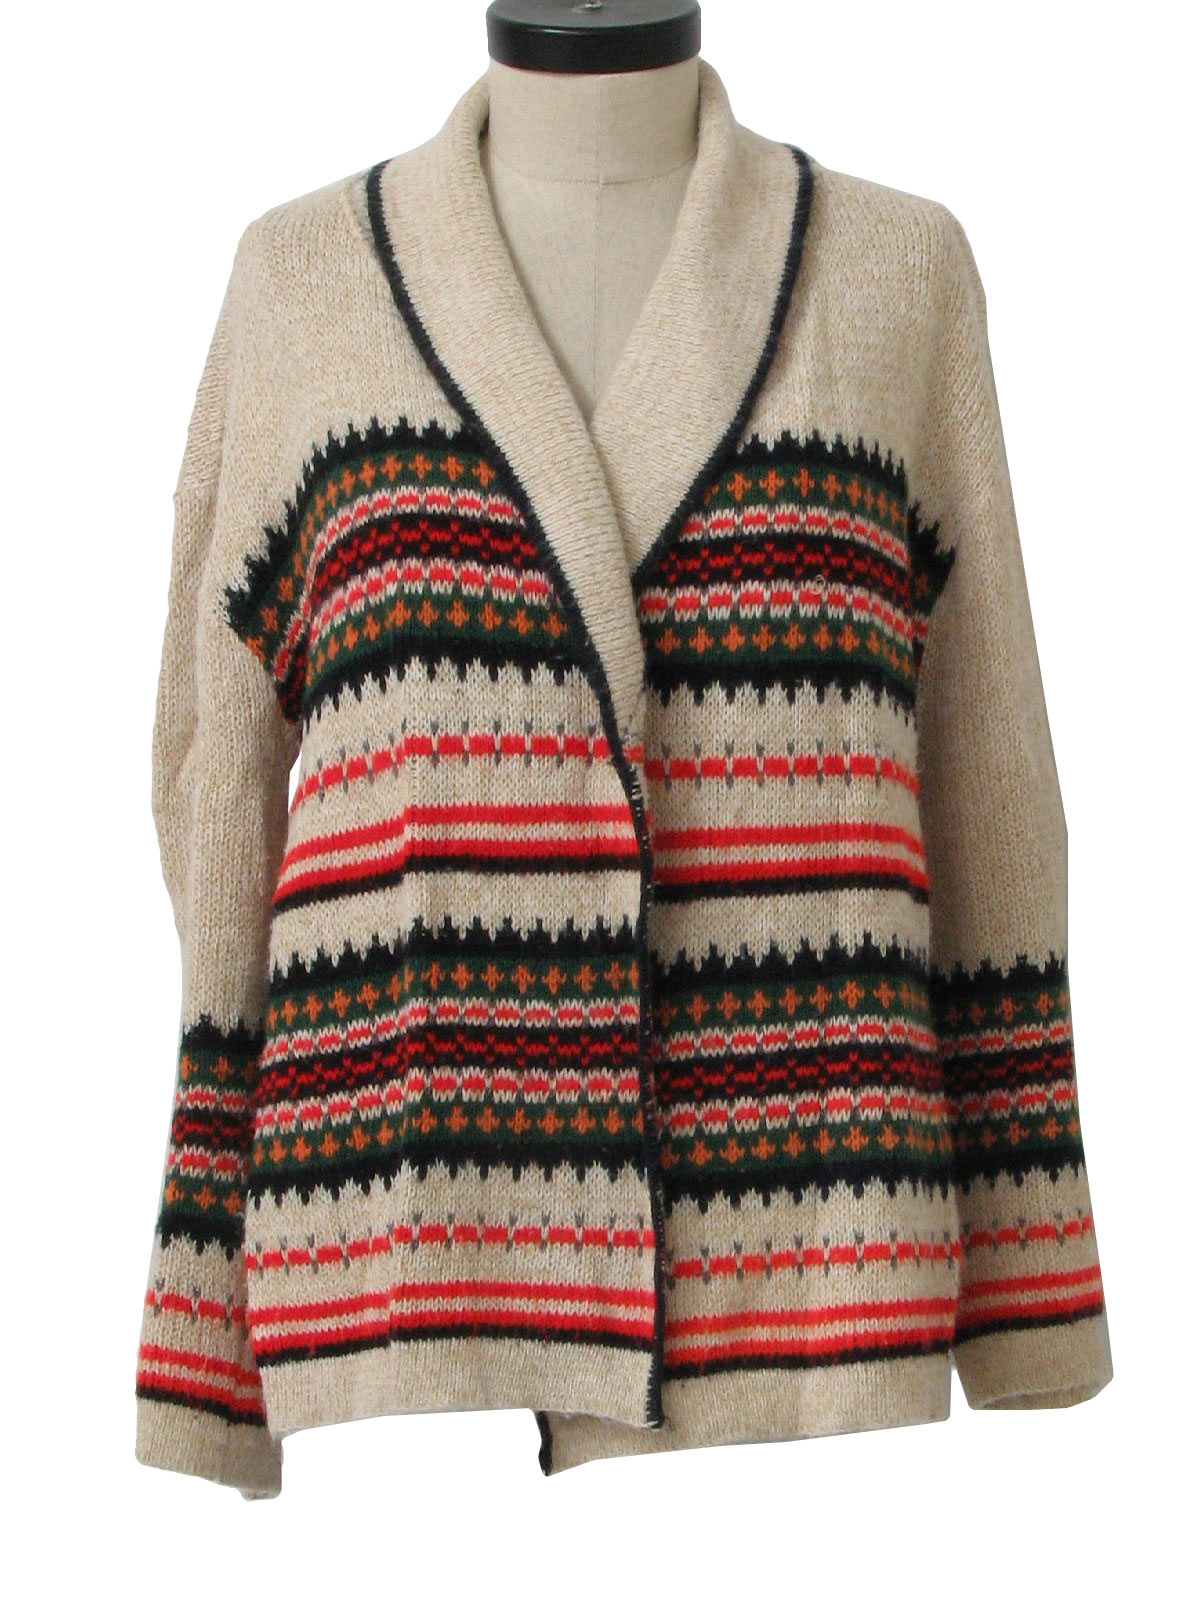 Retro 70s Caridgan Sweater (Missing Label) : 70s -Missing Label- Womens ...